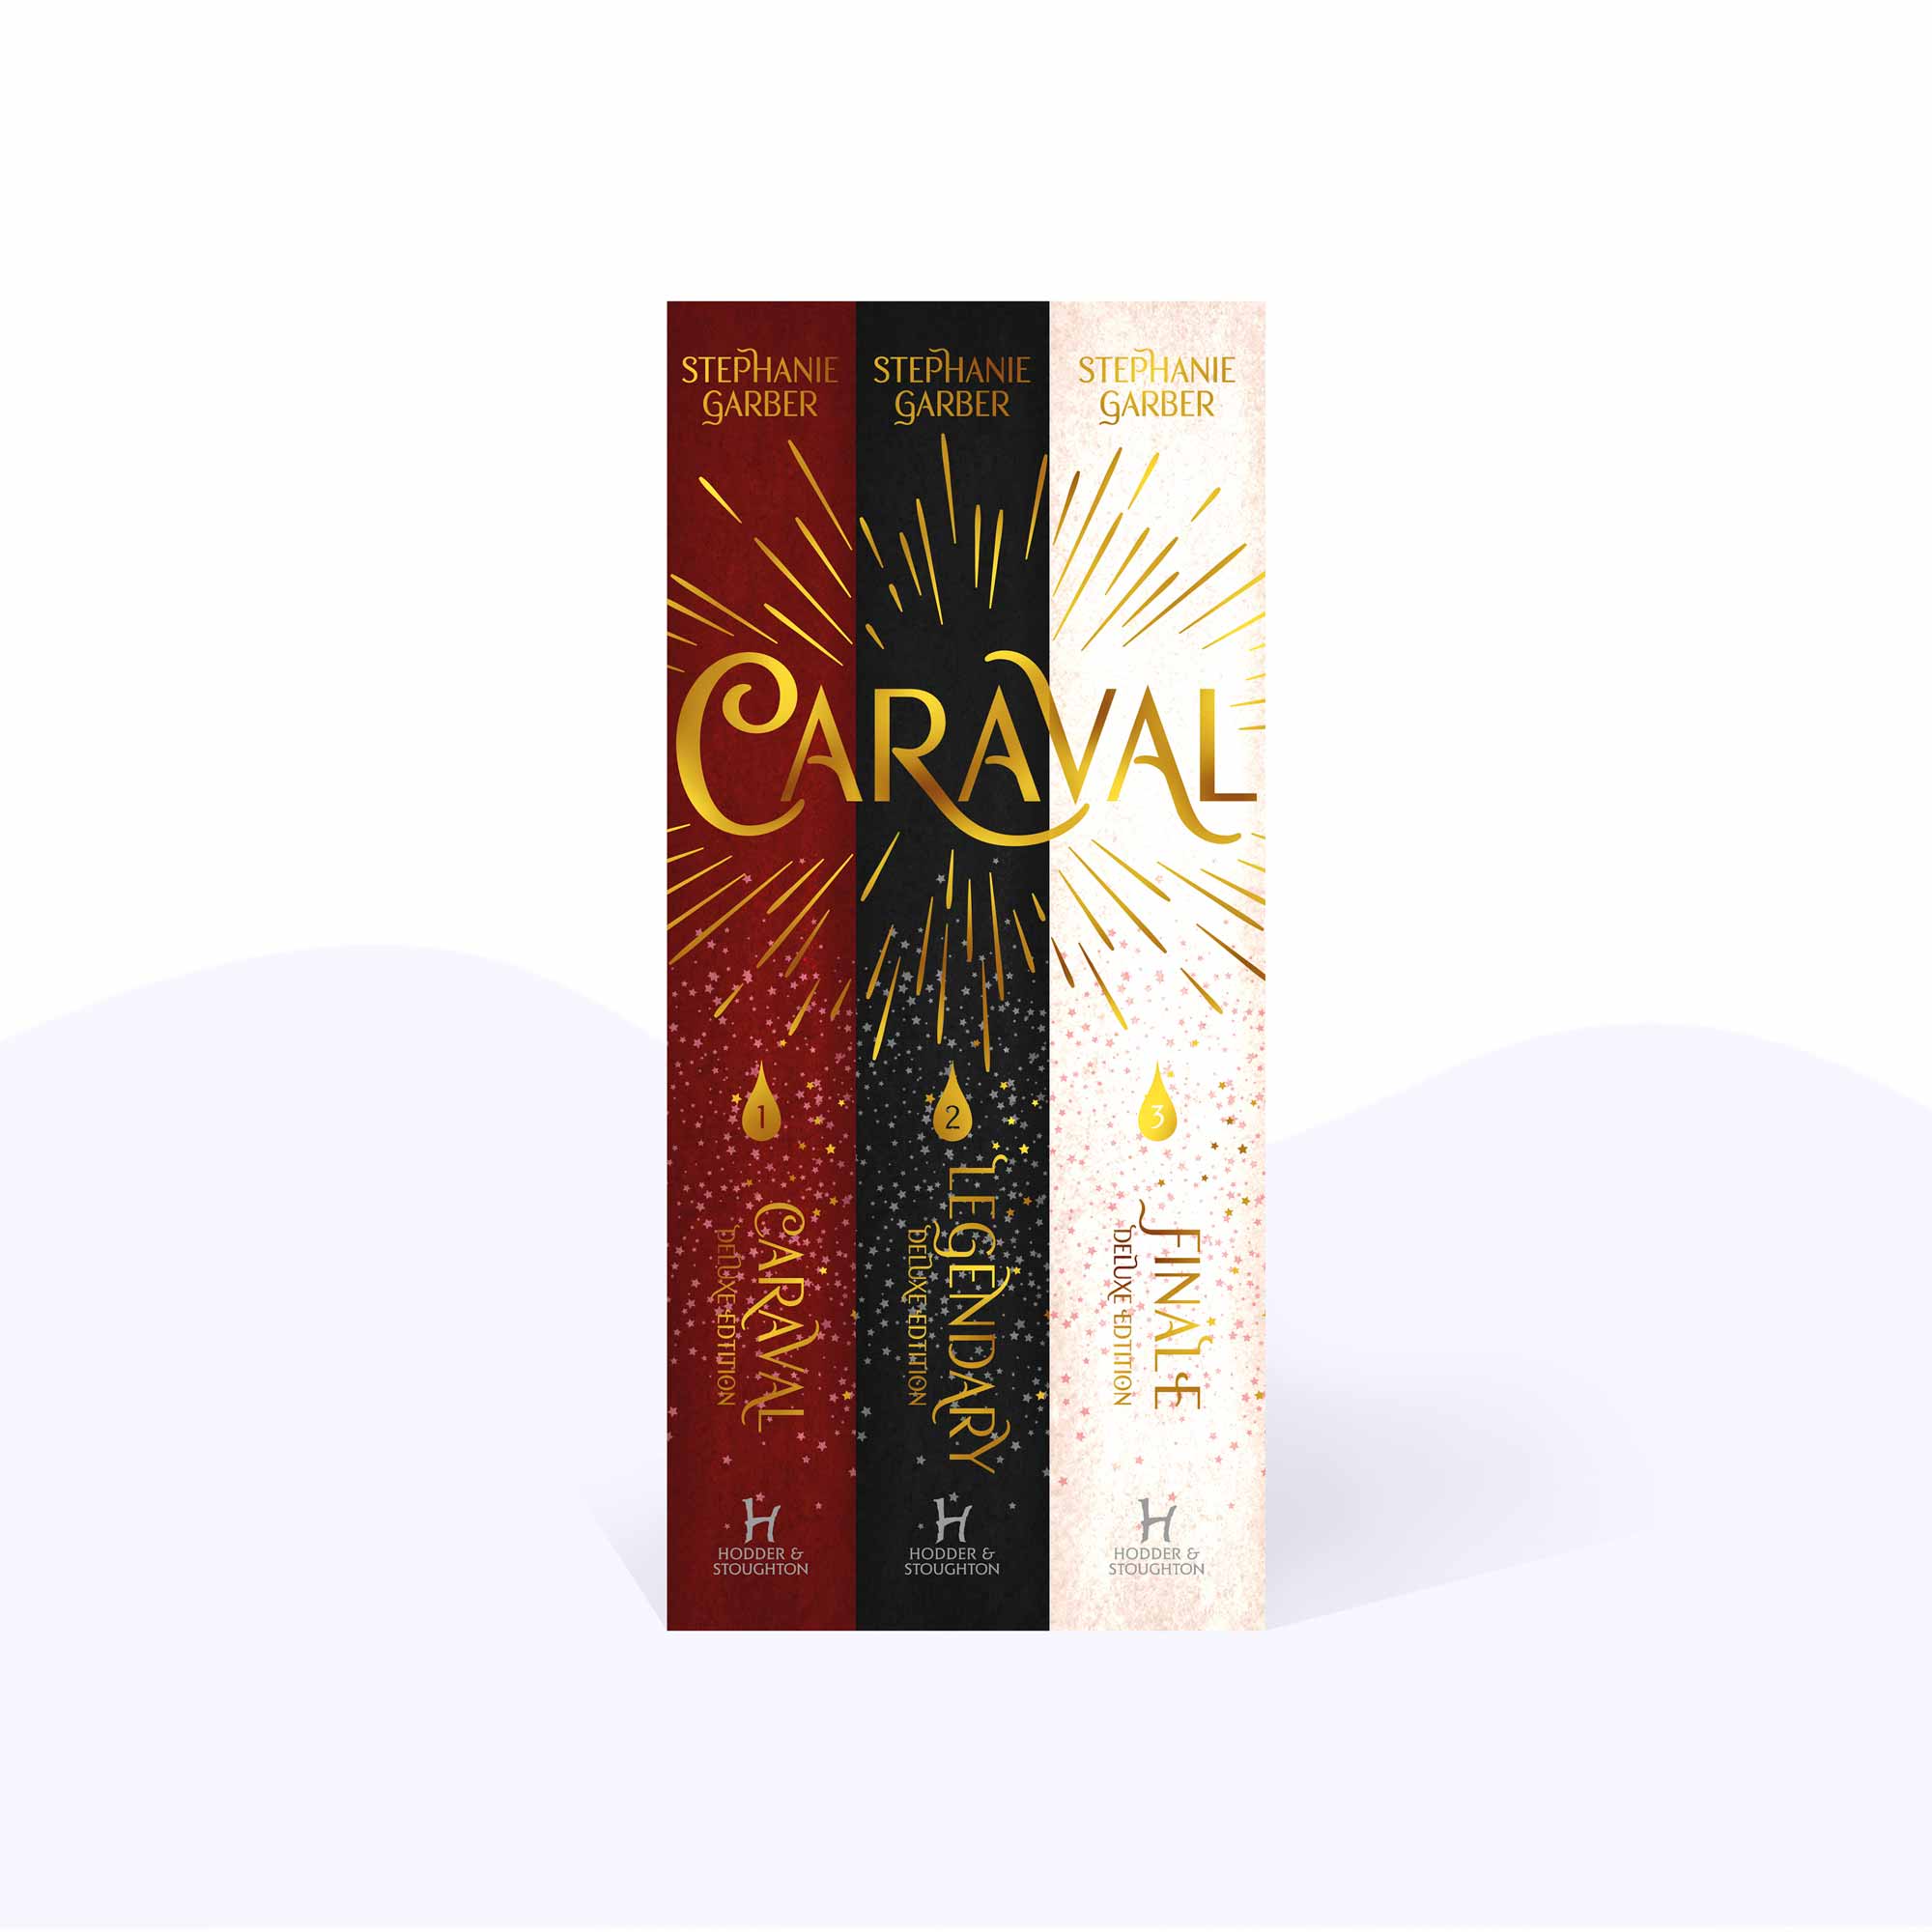 legendary caraval series